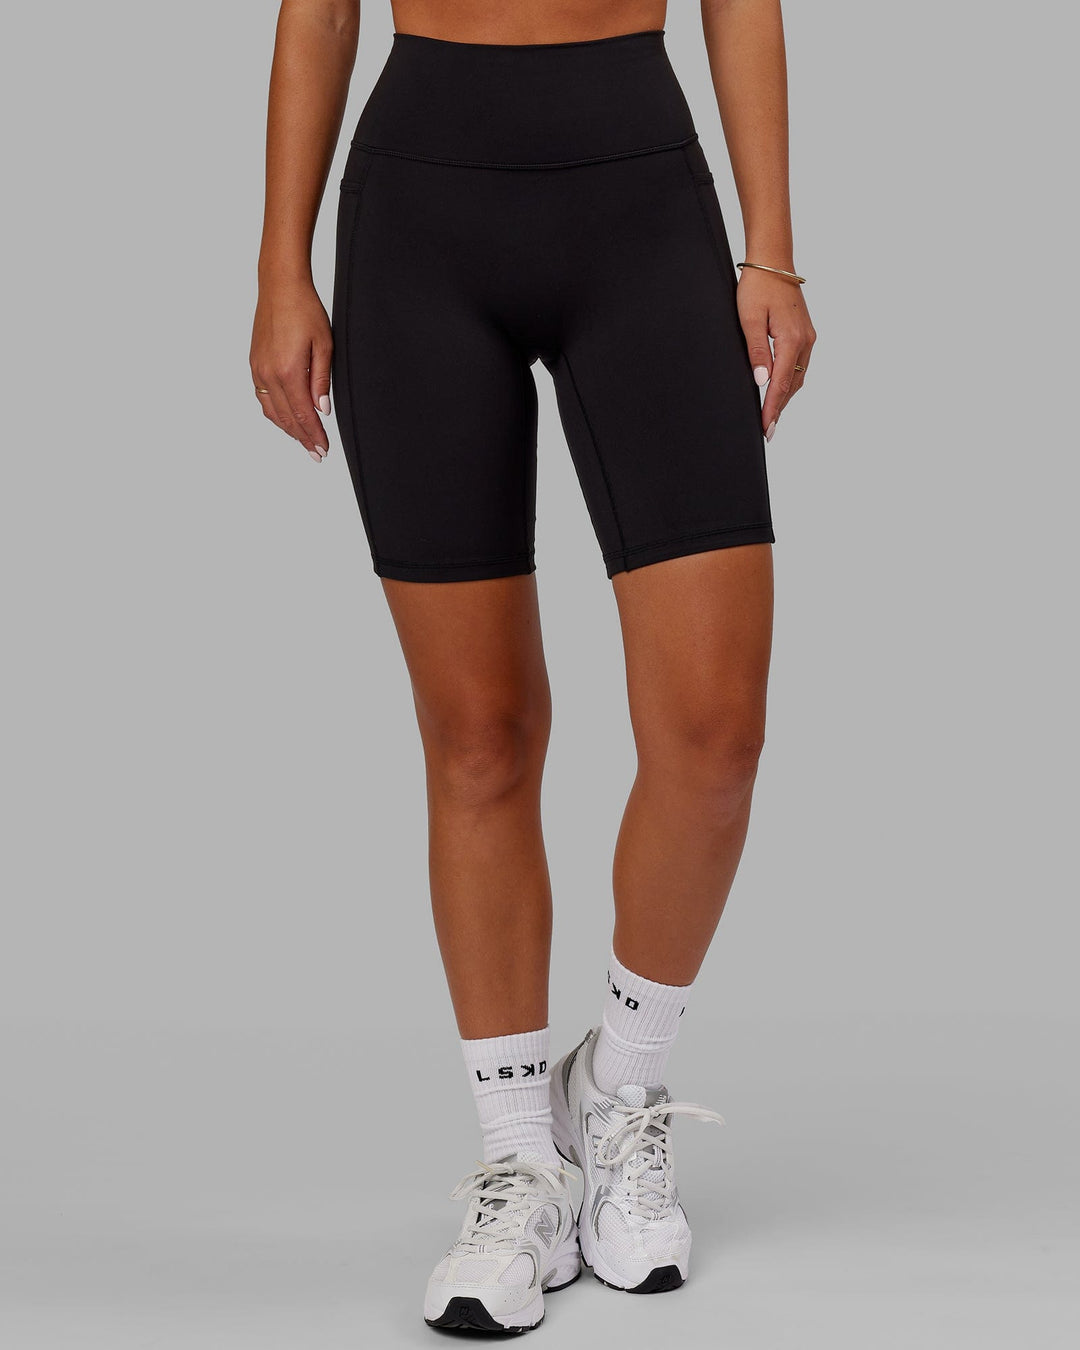 Woman wearing Fusion Bike Short - Black